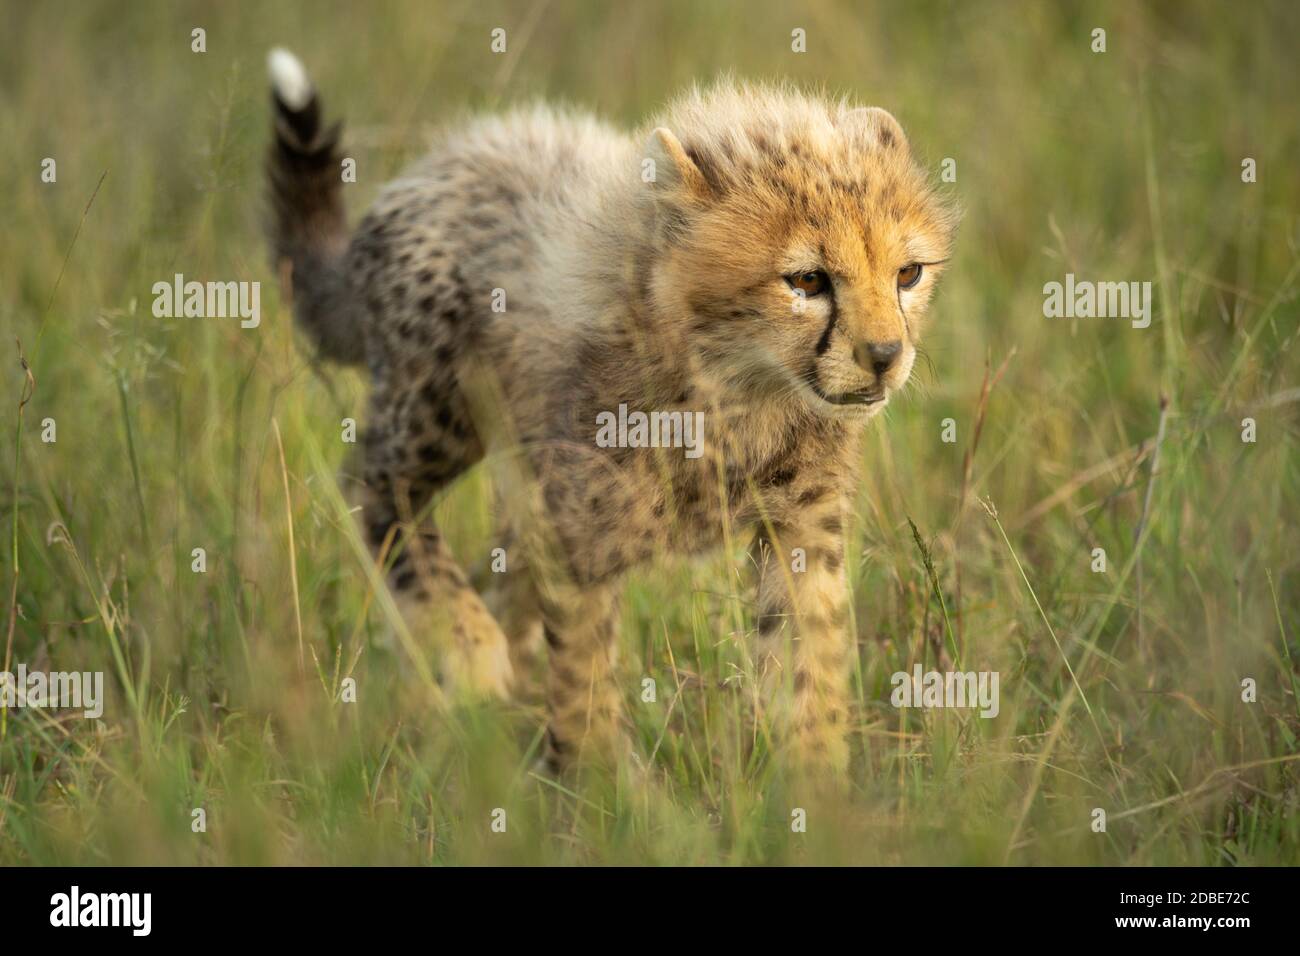 Young cheetah cub walks through long grass Stock Photo